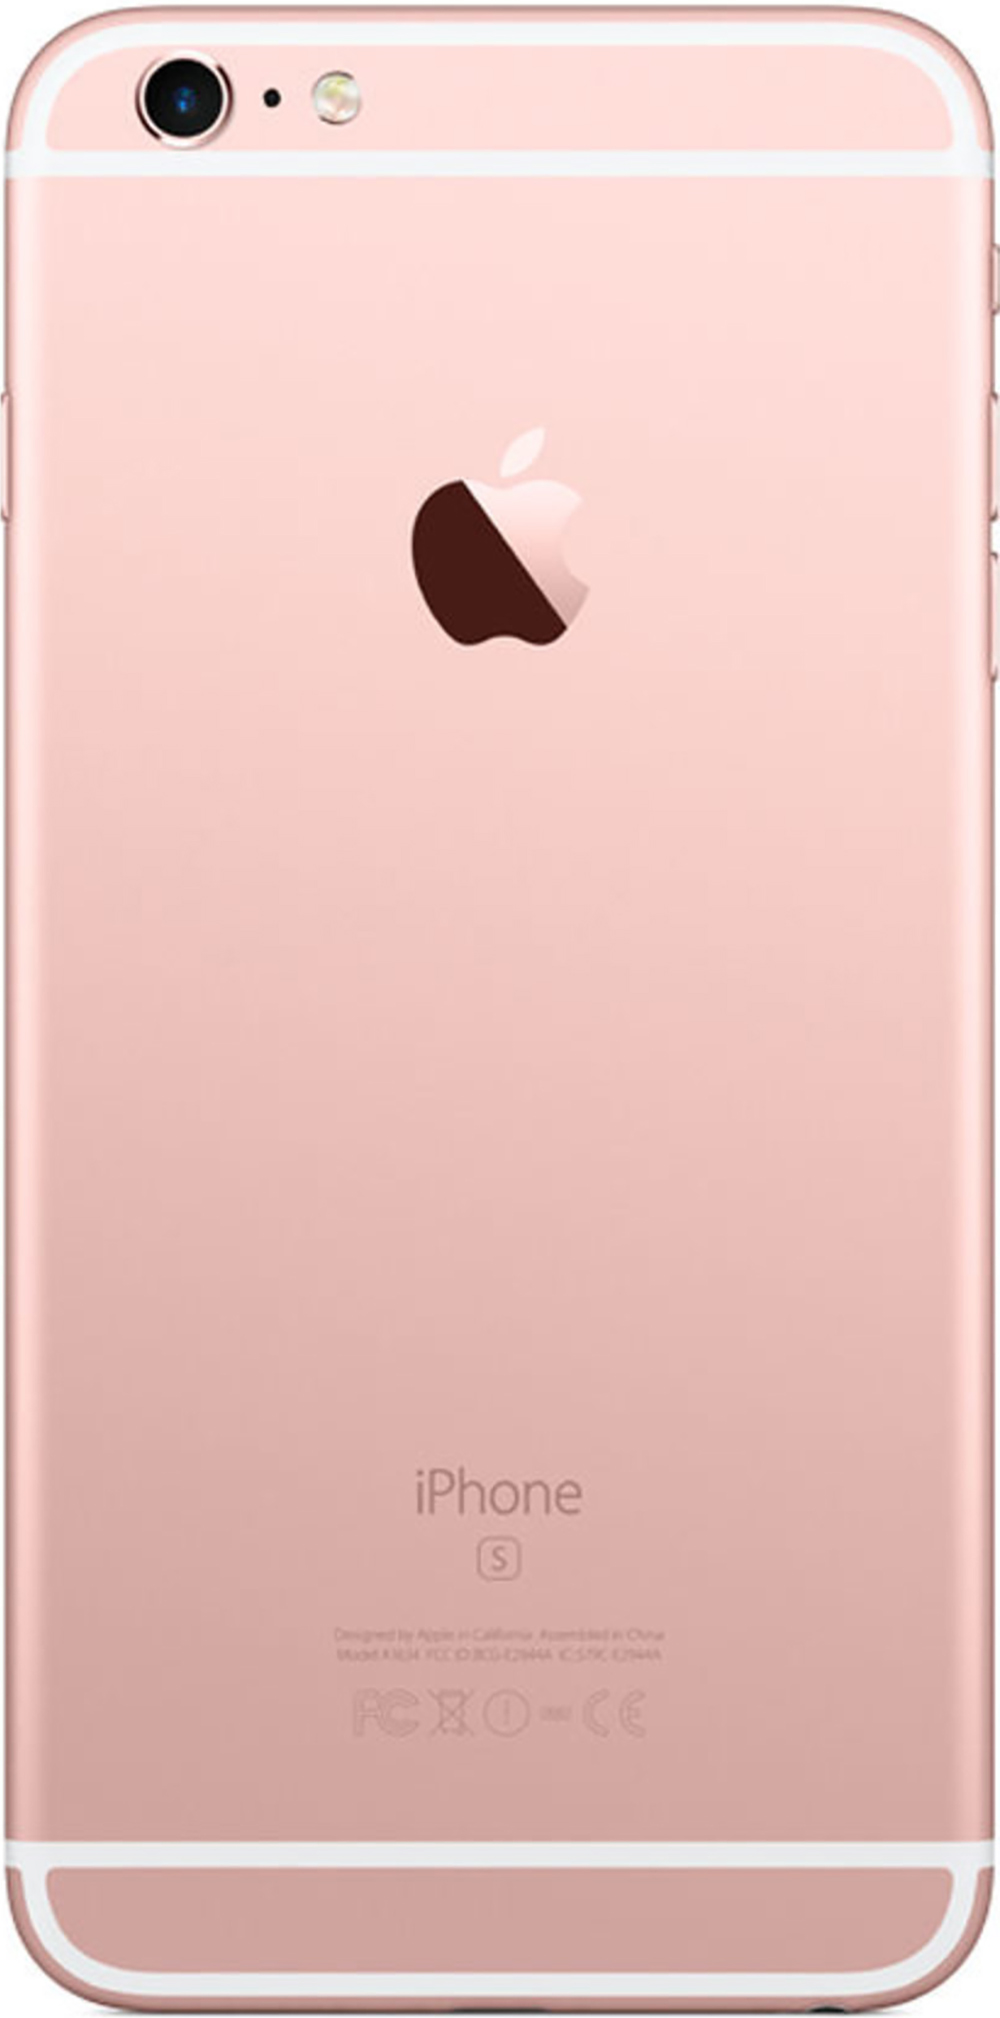 Restored Apple iPhone 6S Plus 64GB - GSM Unlocked Smartphone - Rose Gold (Refurbished) - image 2 of 3